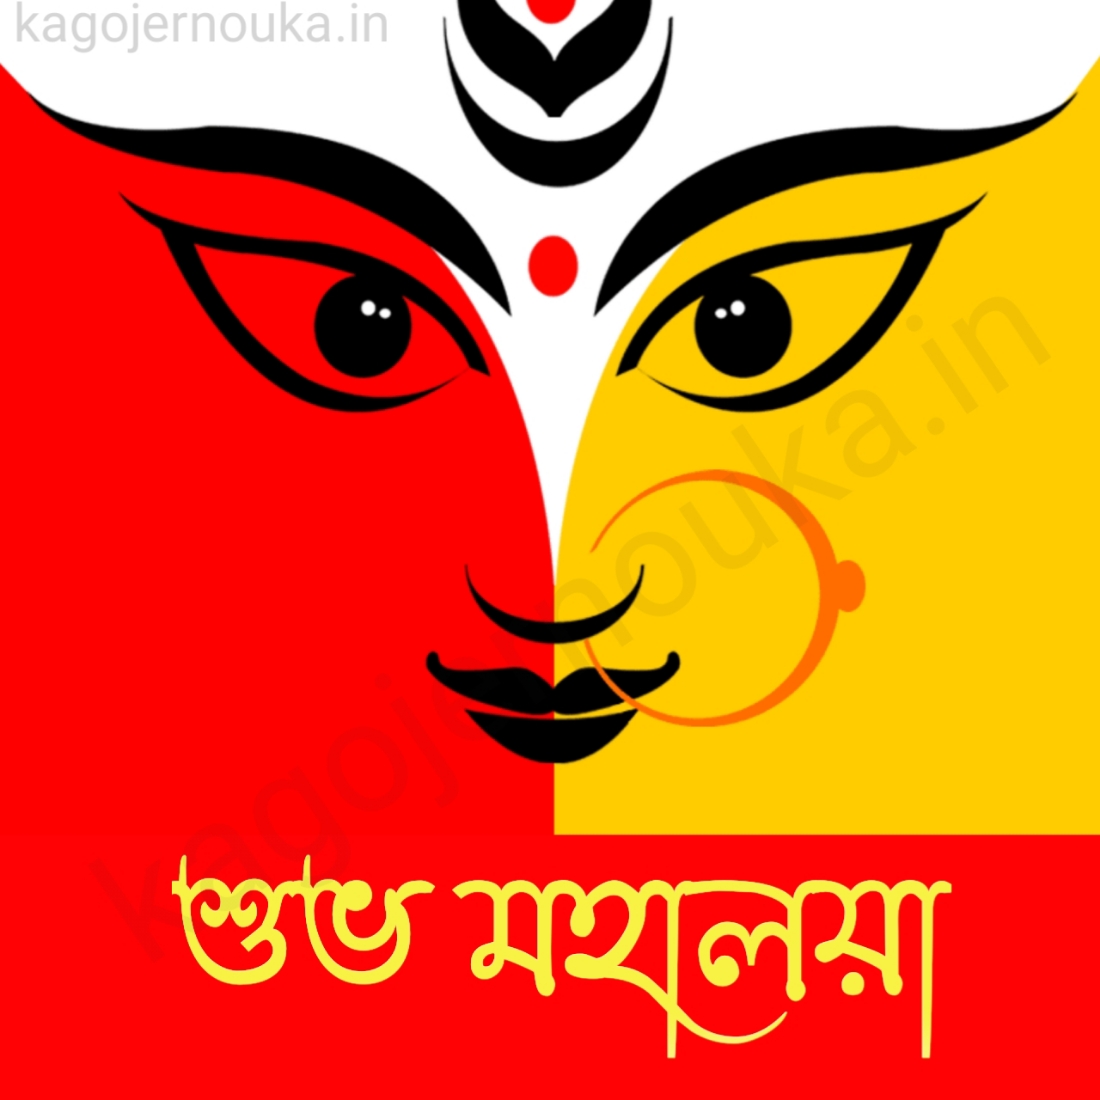 Subho mahalaya wishes image download শুভ মহালয়া 2022